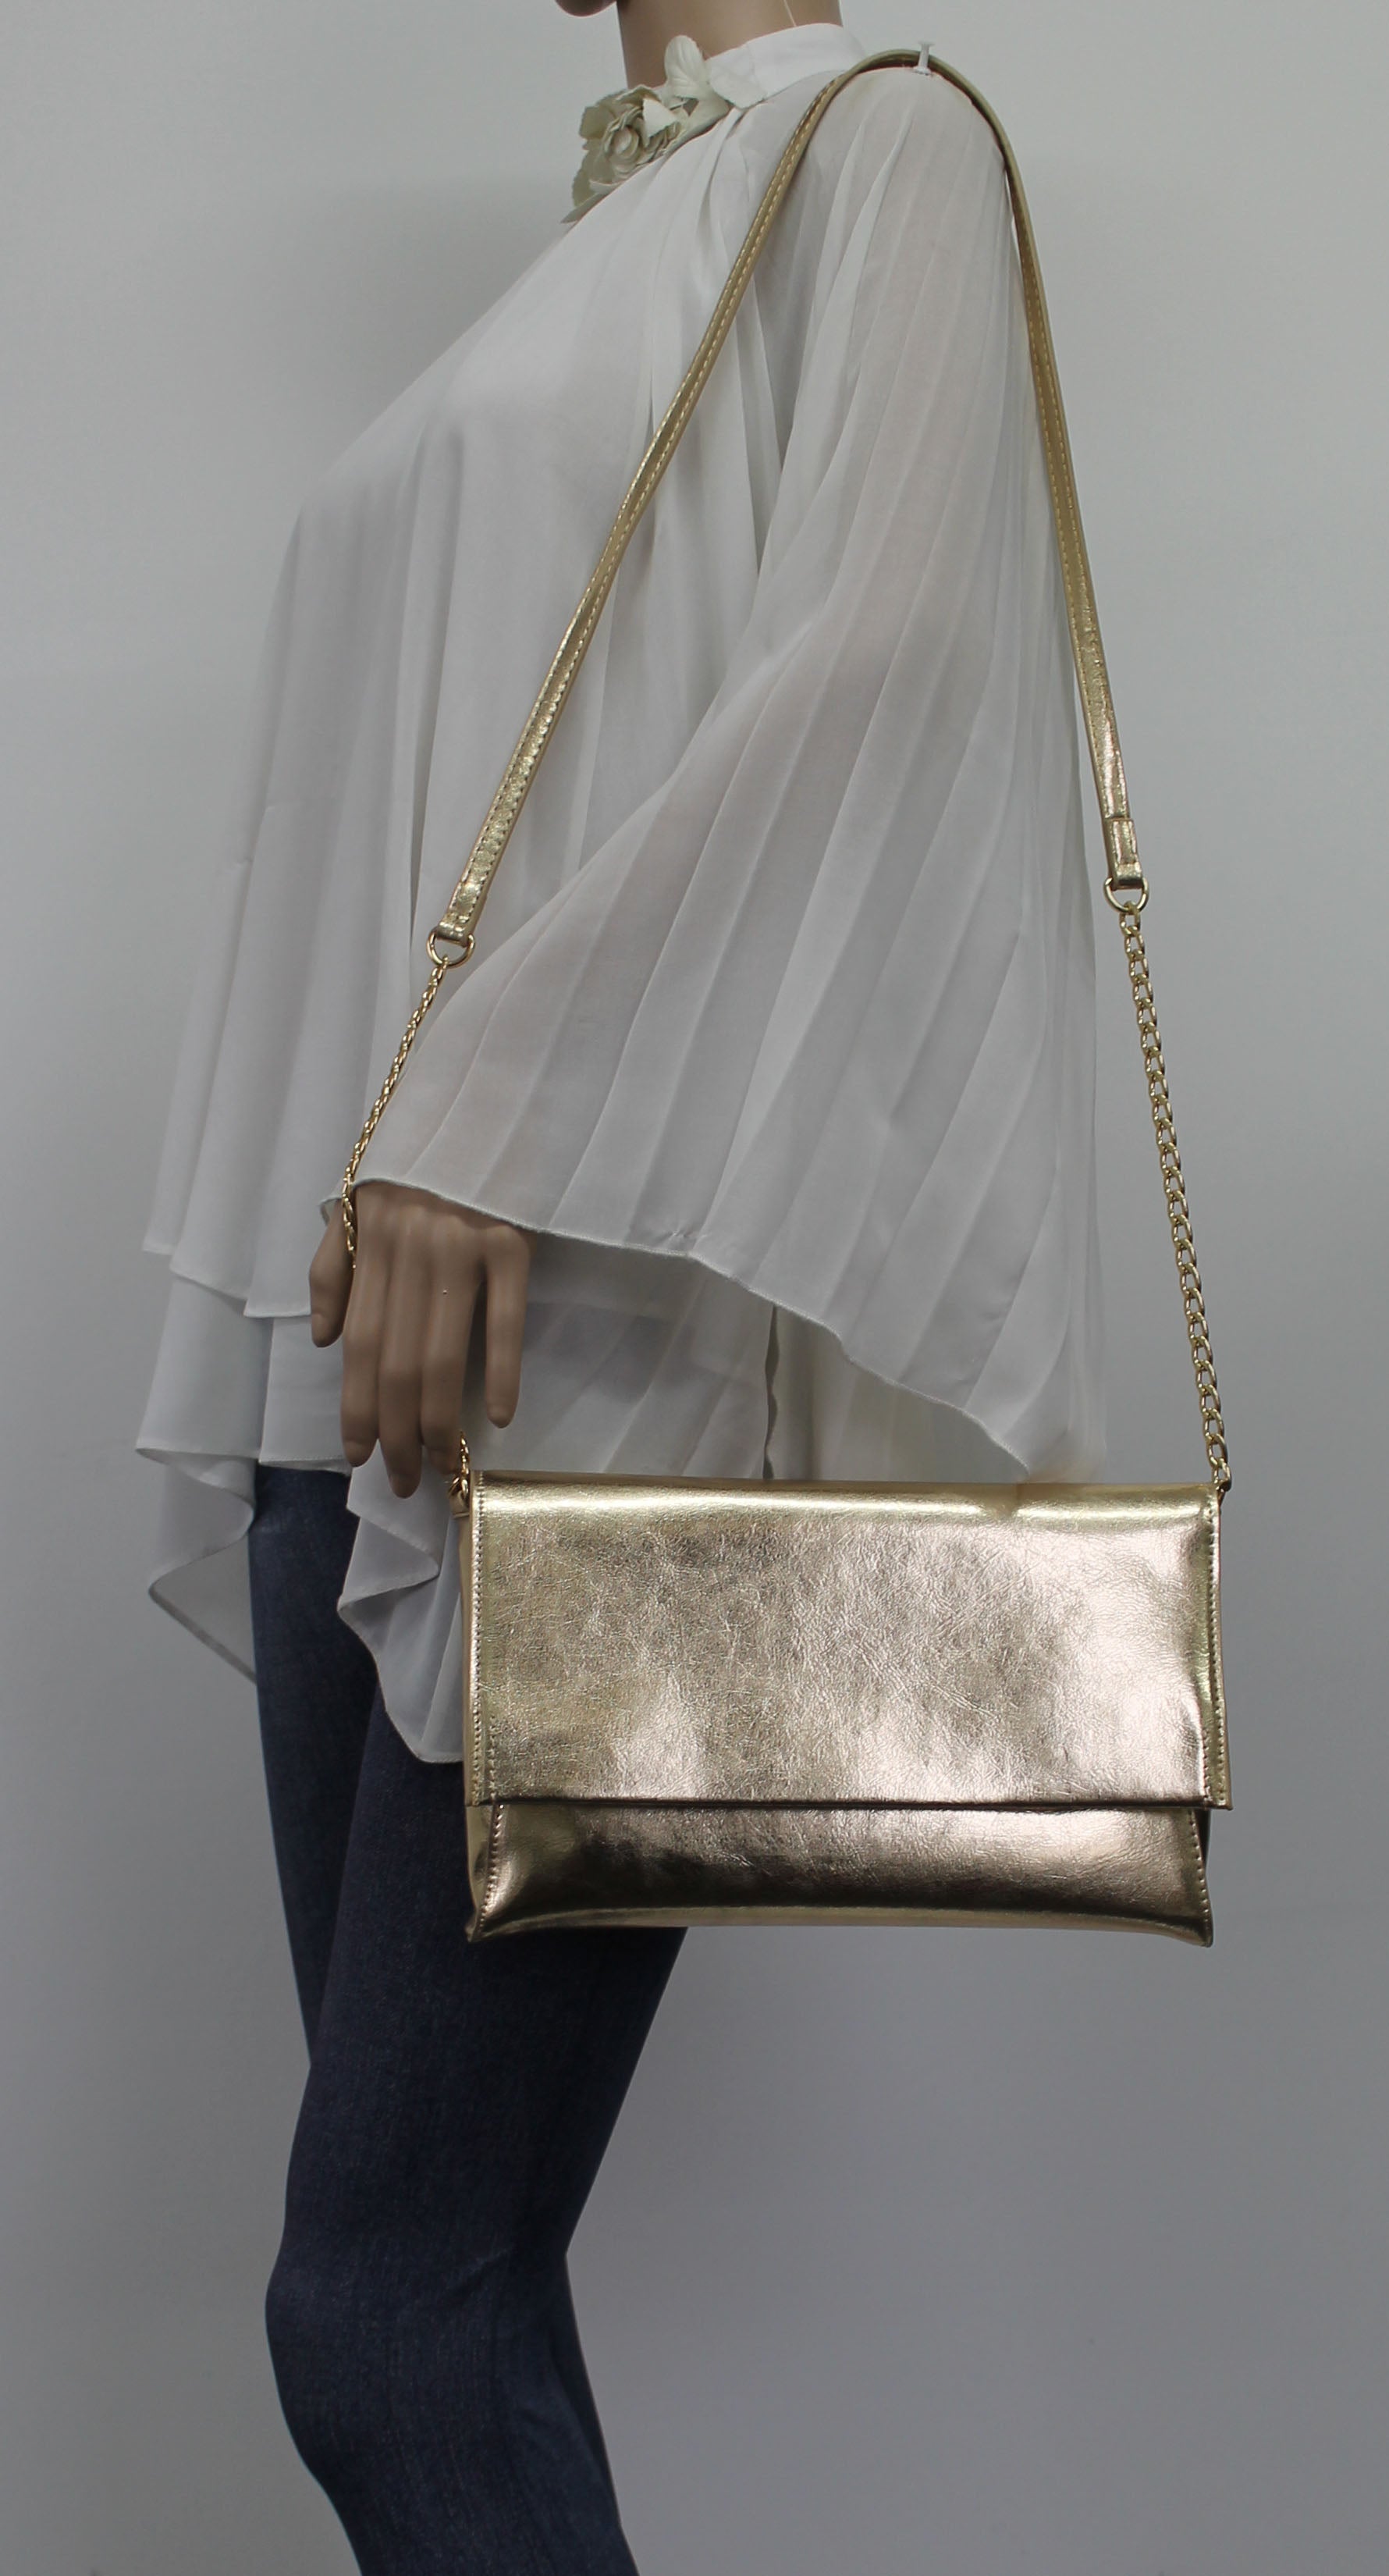 SWANKYSWANS Jenna Clutch Bag Gold Cute Cheap Clutch Bag For Weddings School and Work